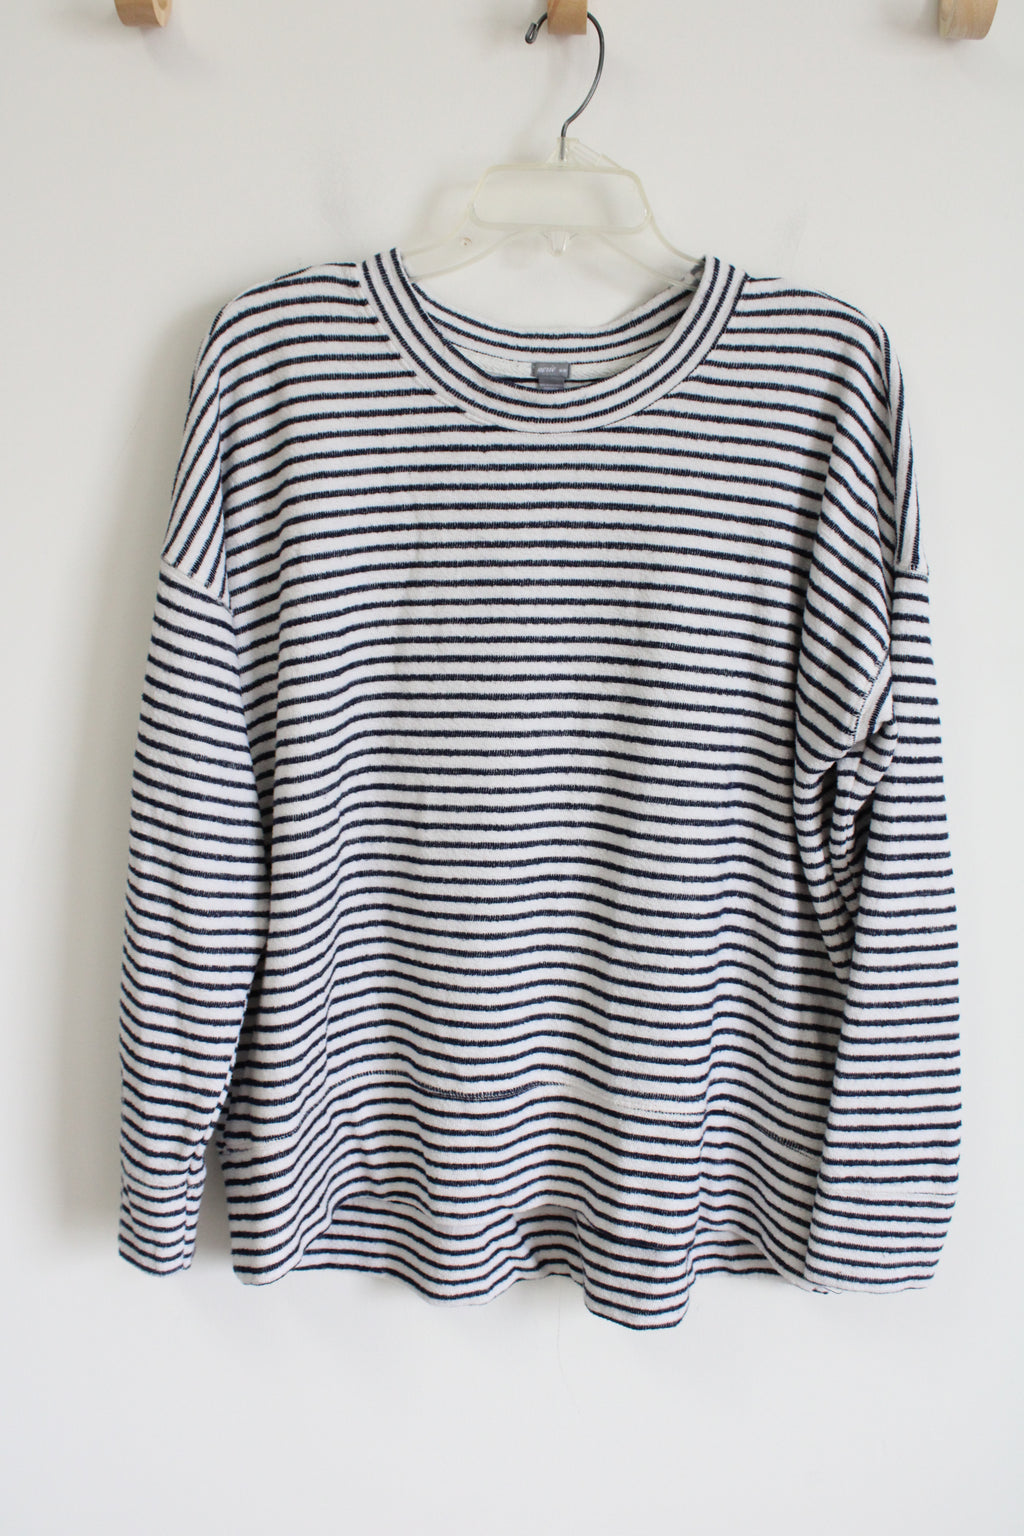 Aerie Navy Blue White Striped Long Sleeved Shirt | M